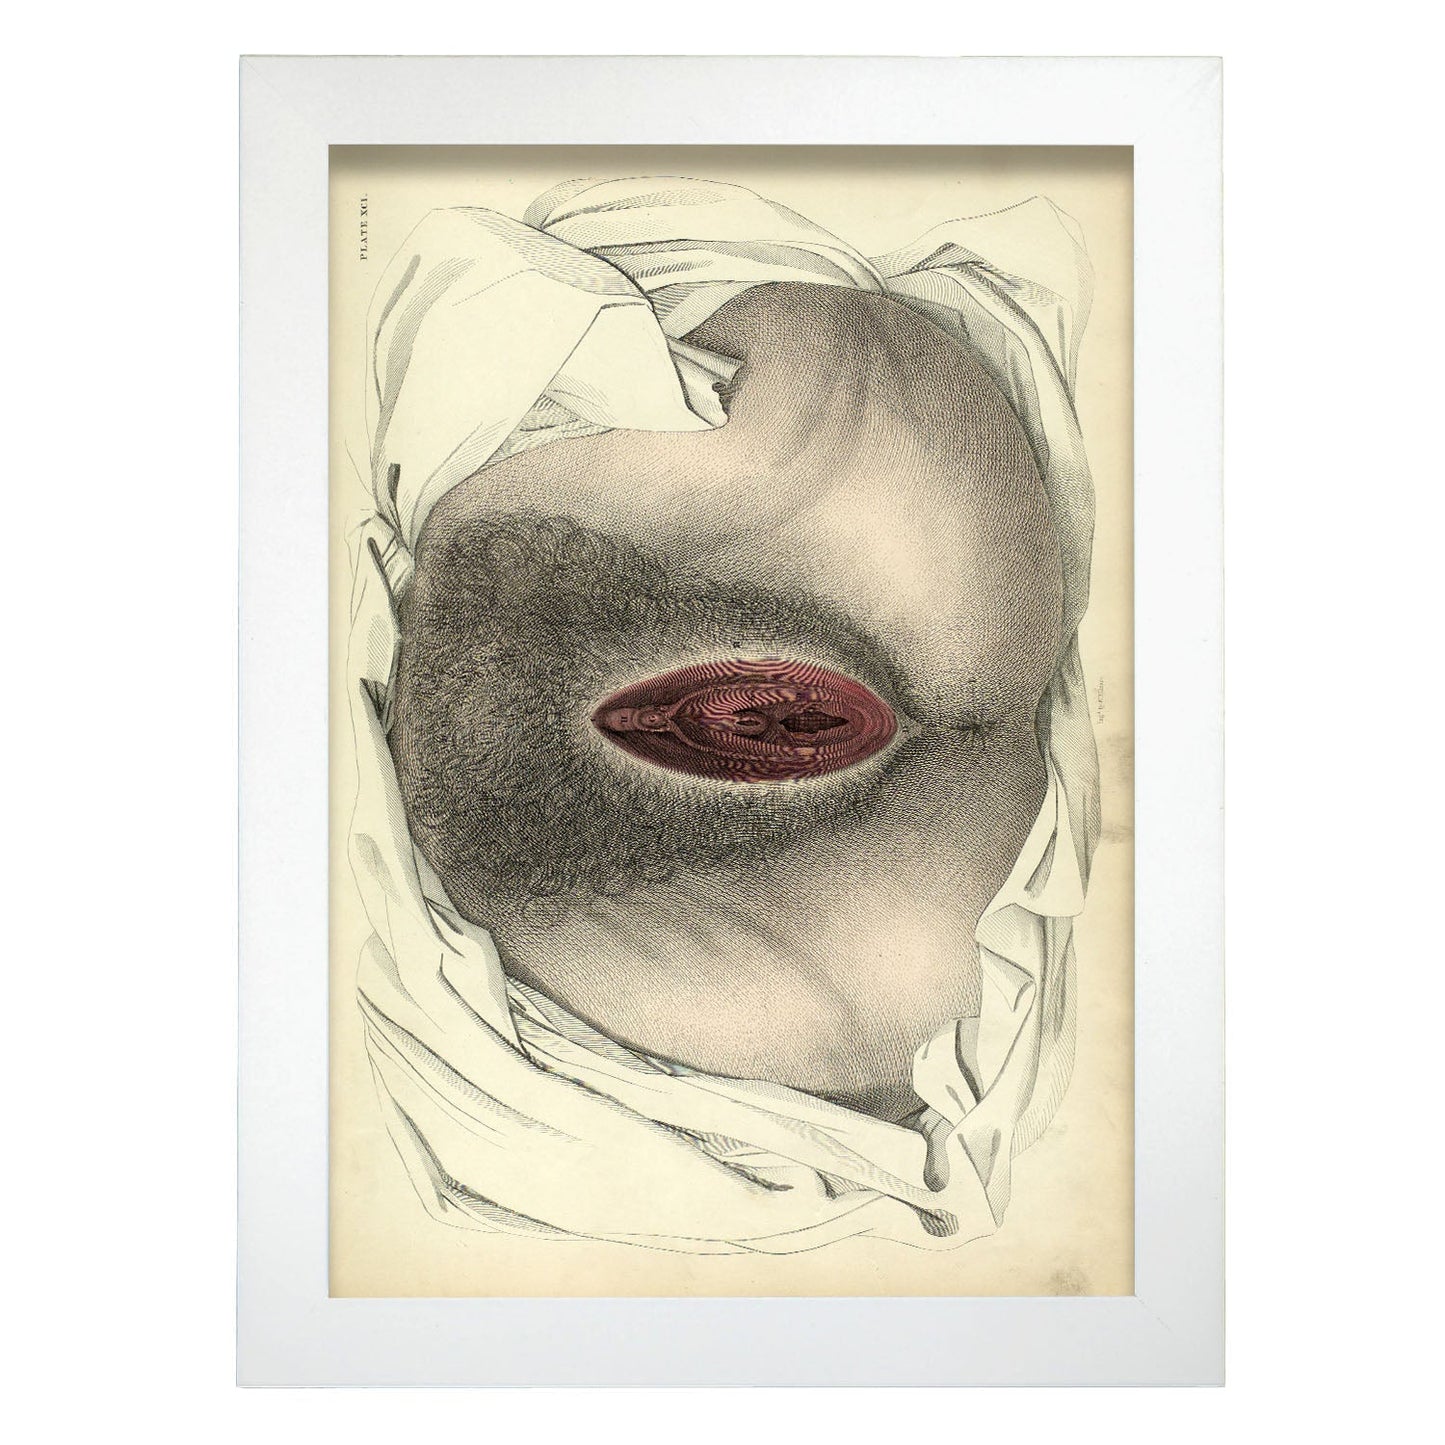 Urogenital system, female; perineum-Artwork-Nacnic-A4-Marco Blanco-Nacnic Estudio SL